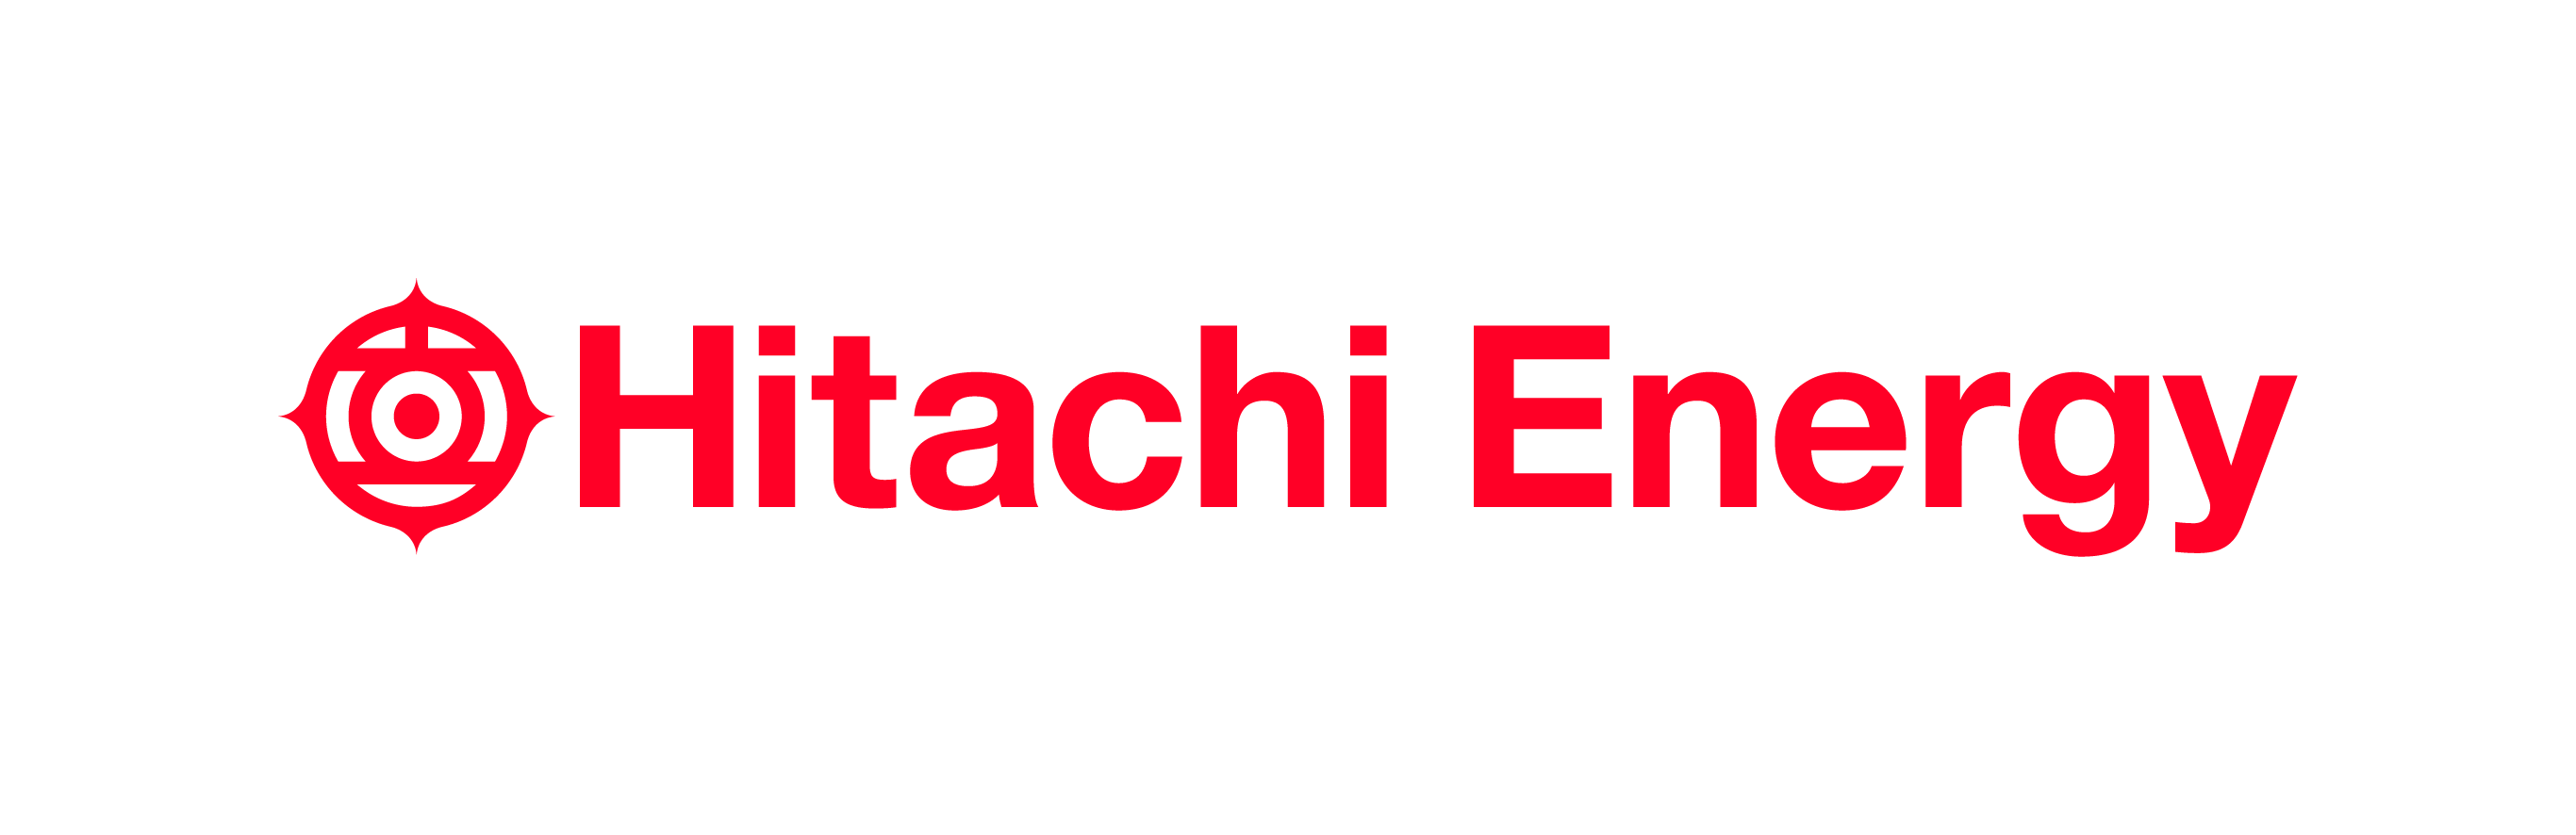 Hitachi Energy Company Name RGB Inspire red